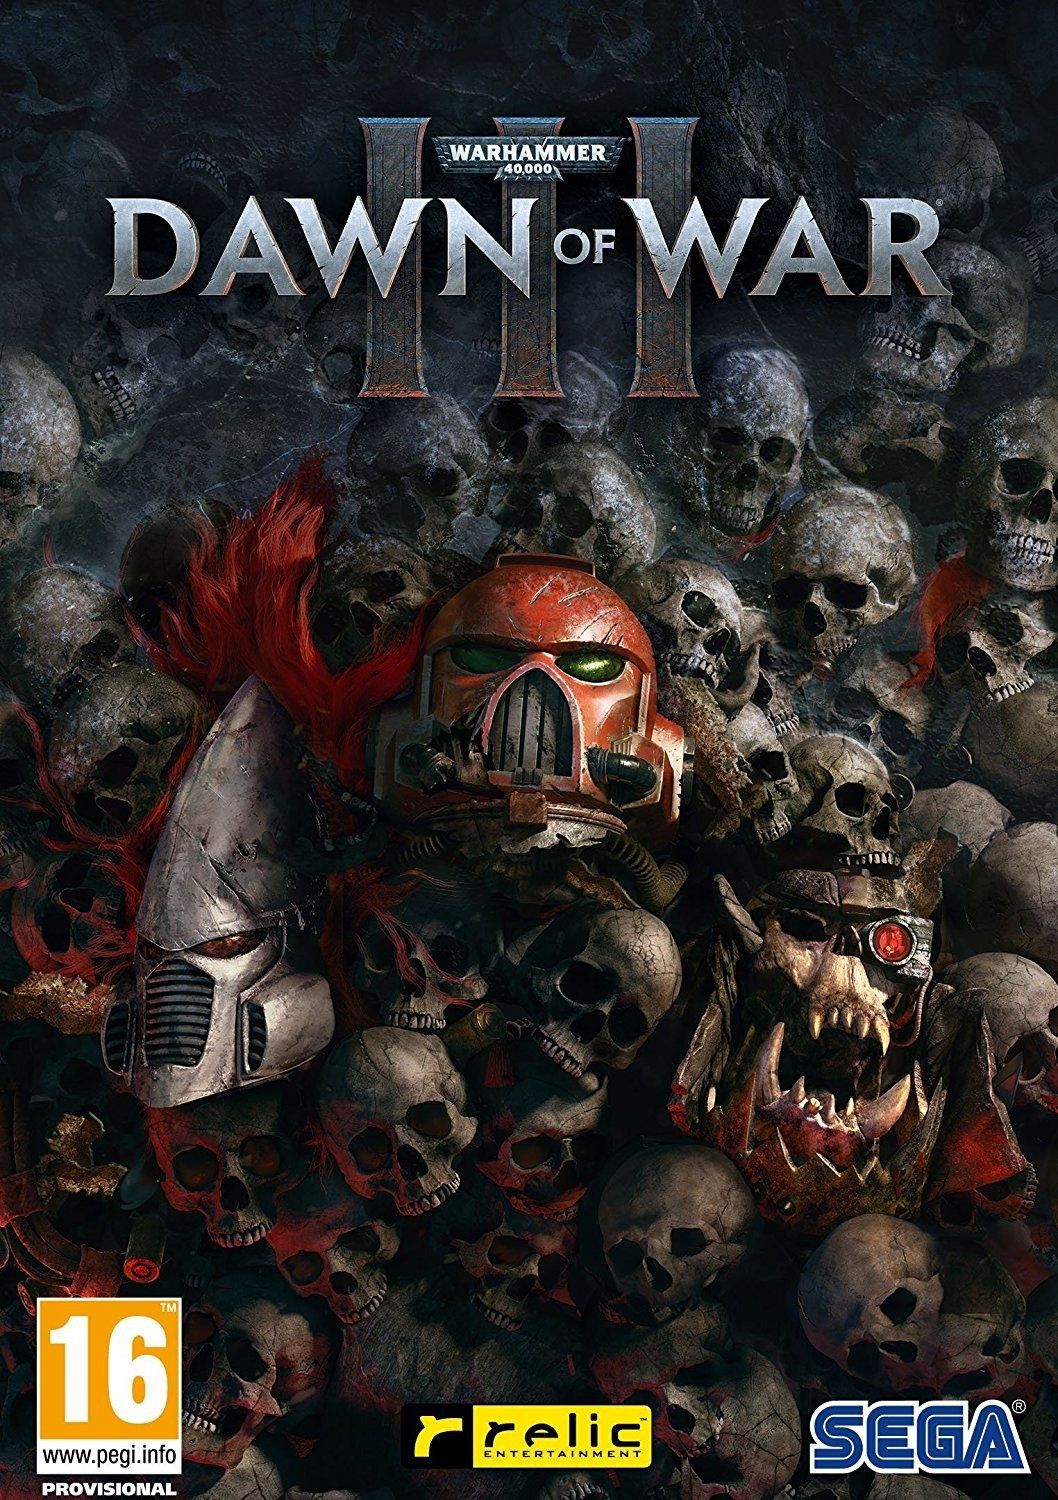 warhammer 40000 ™ dawn of war iii download free